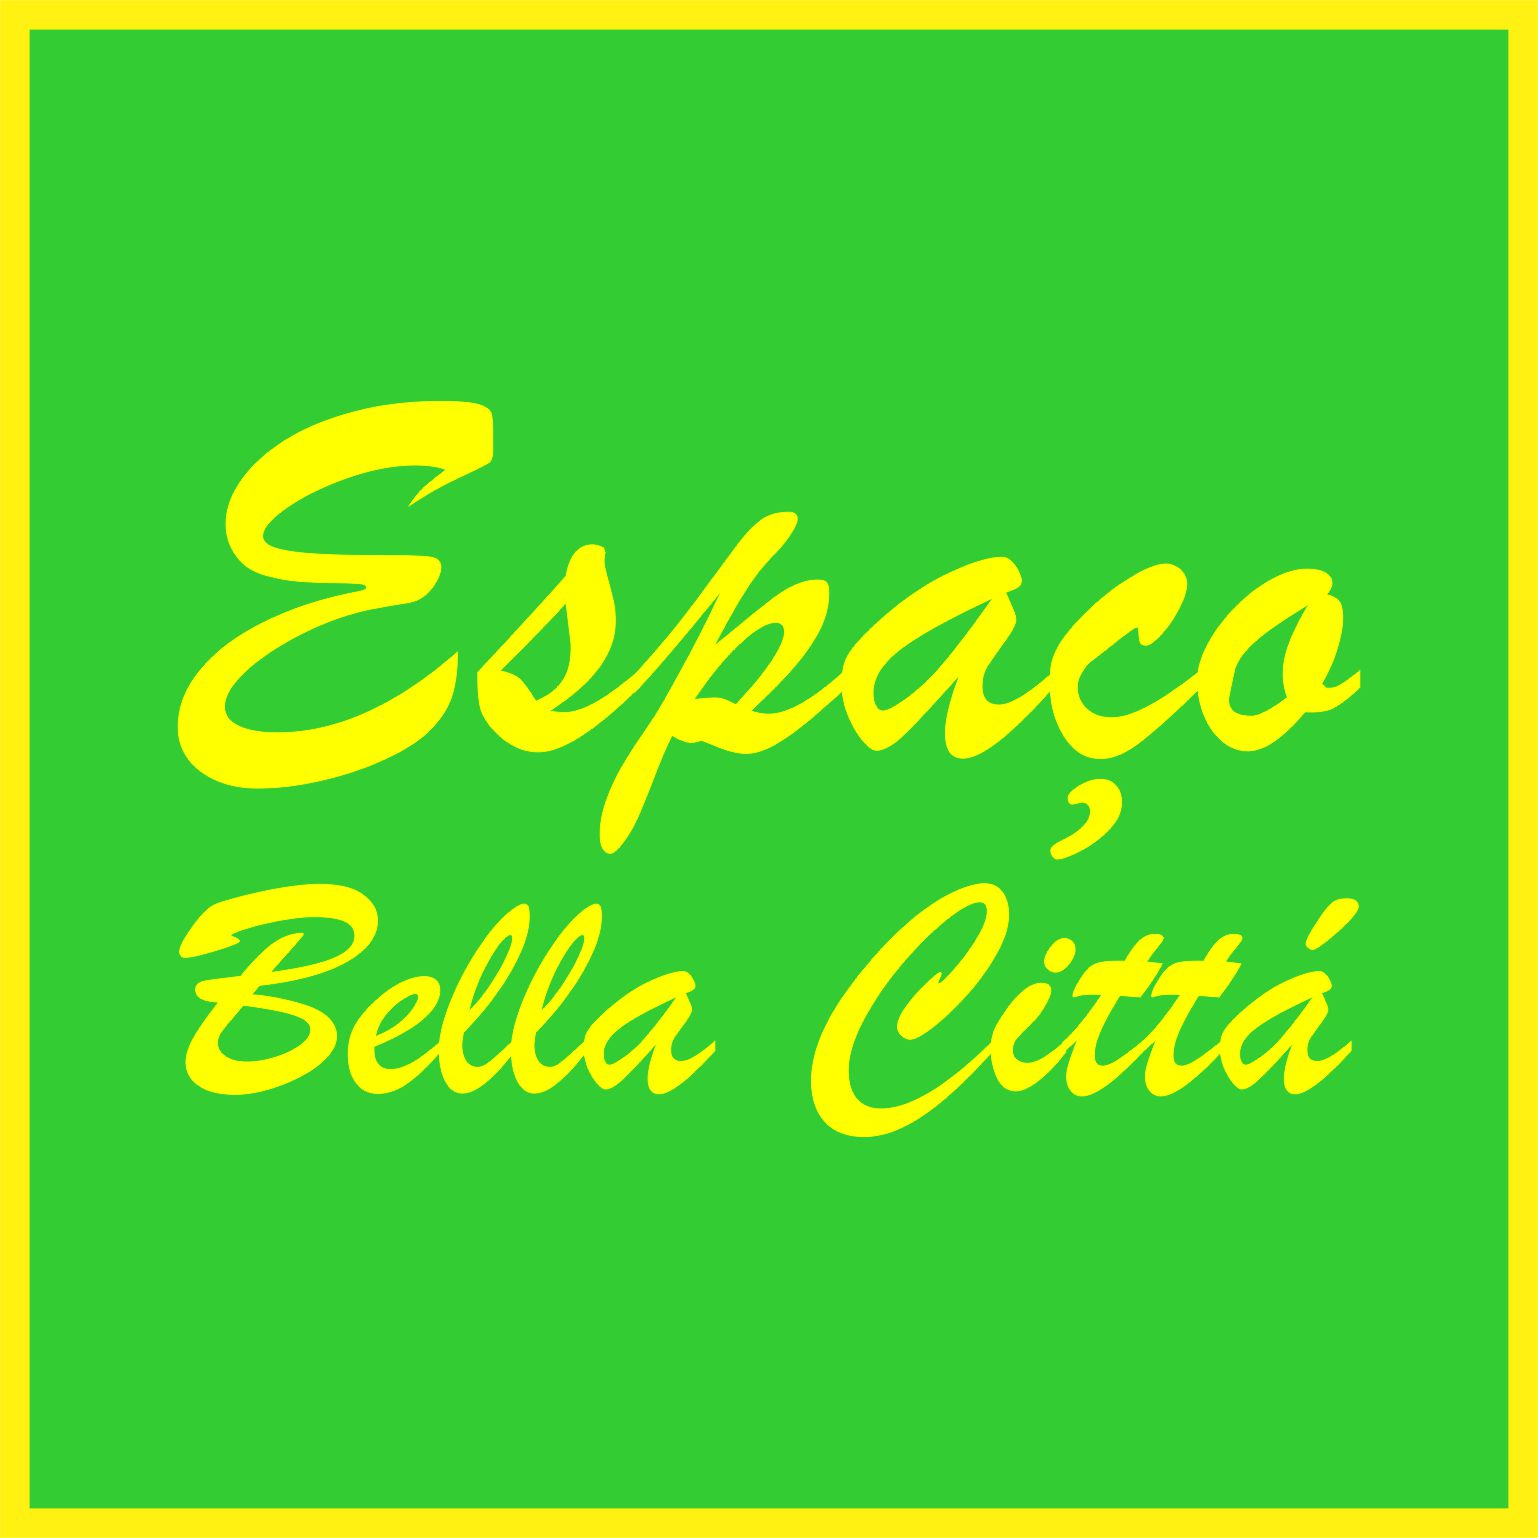 Espaço Bella Cittá